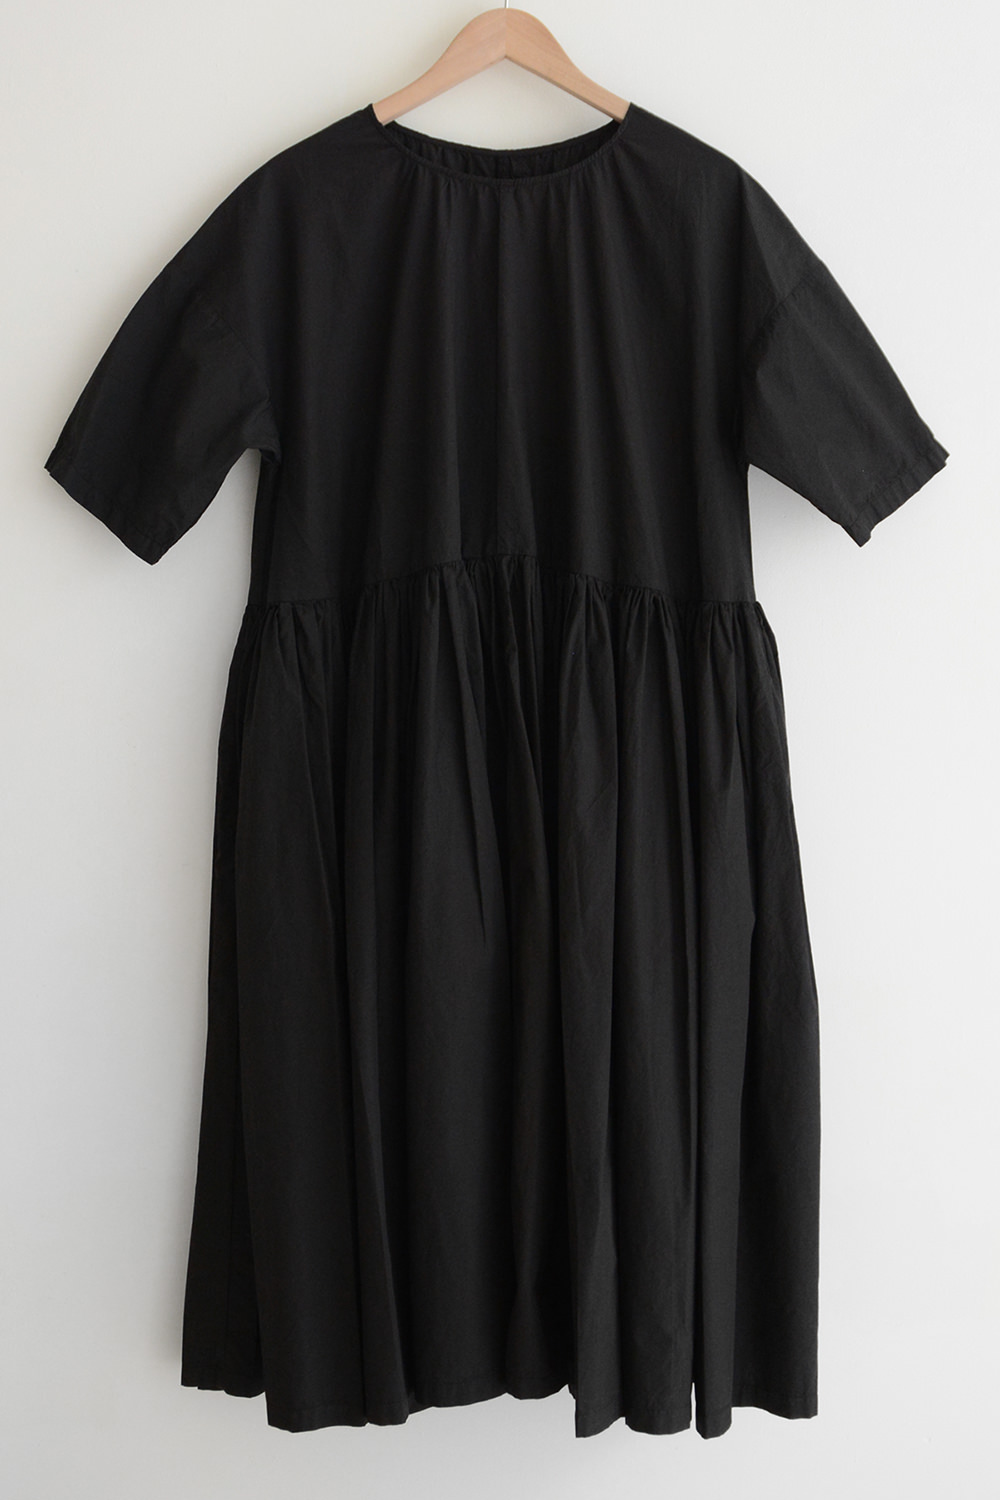 Manuelle Guibal Dress Andi Black Top Picture